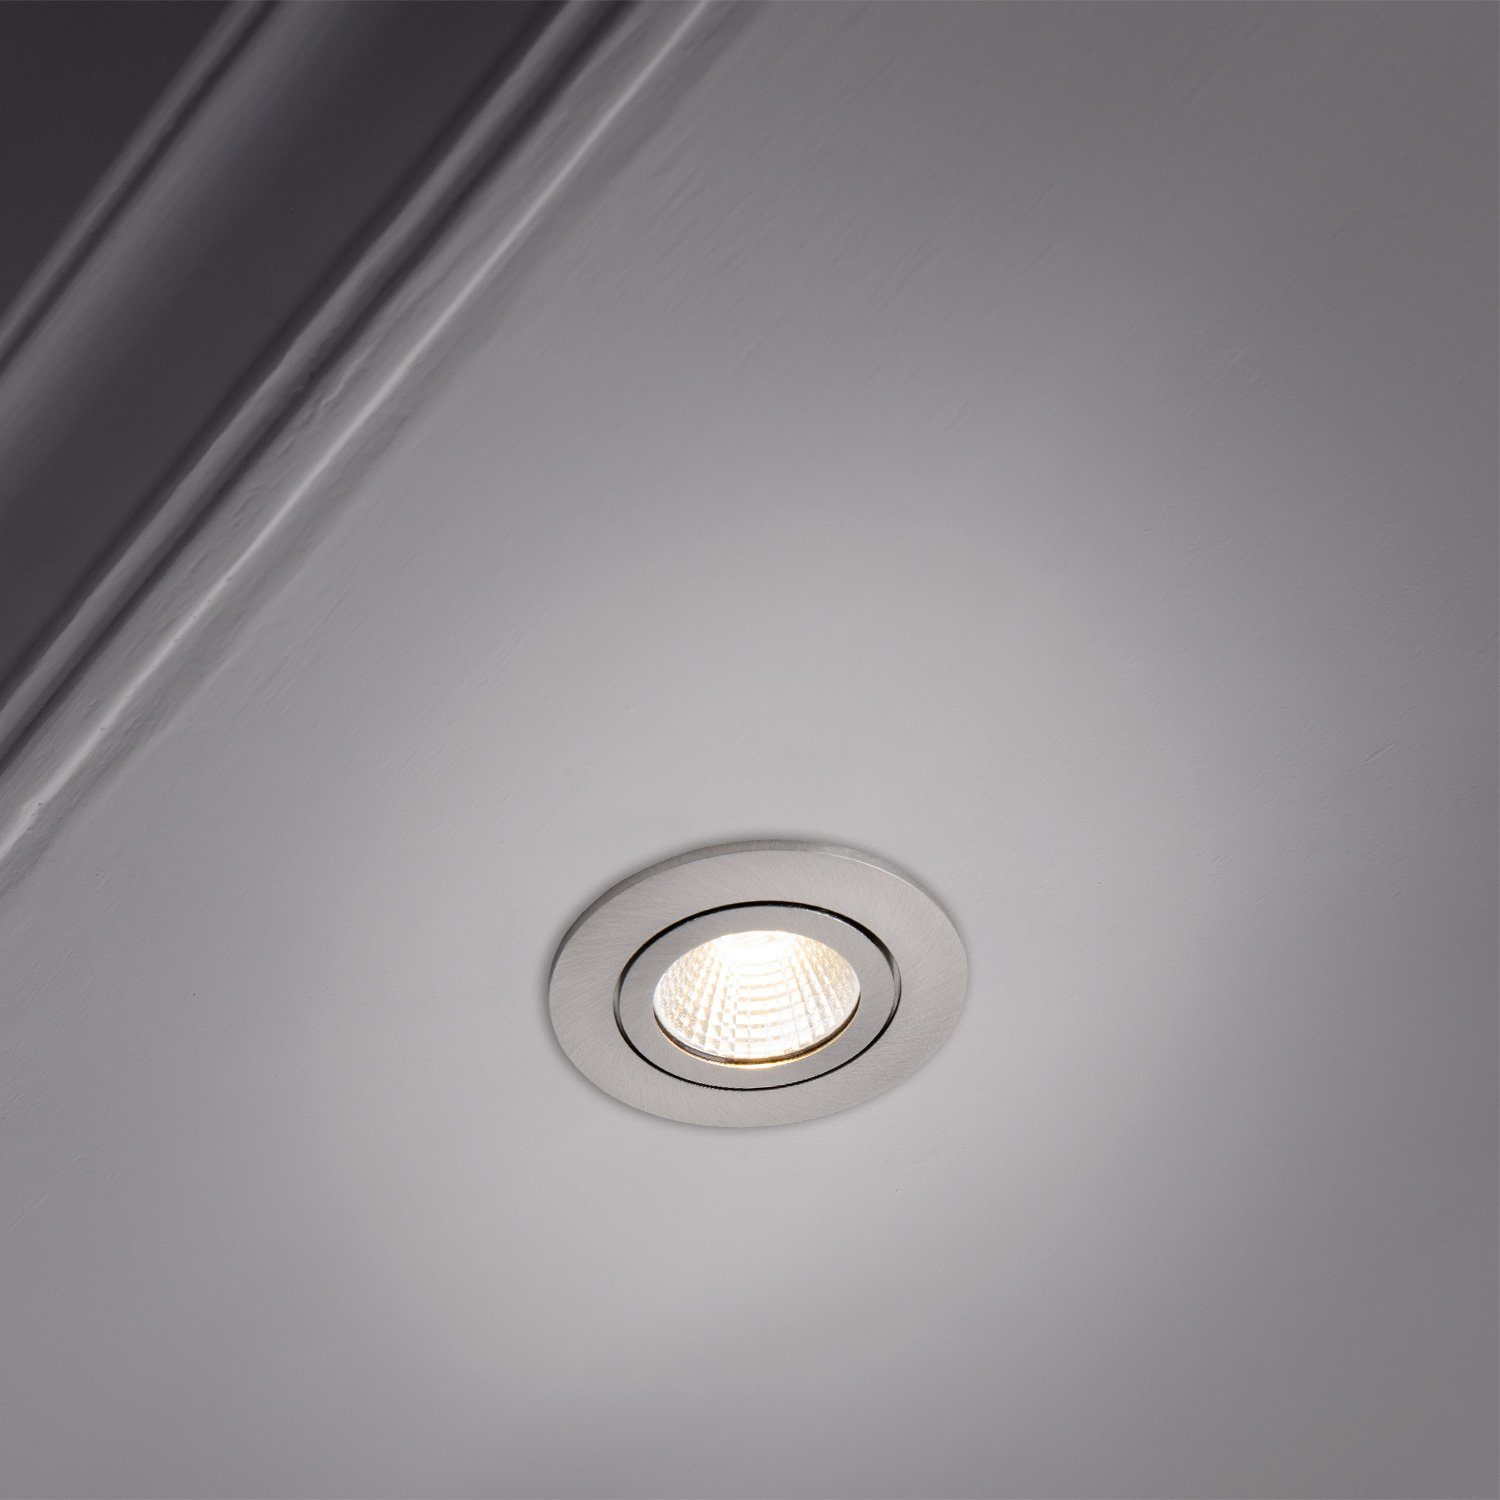 Paco Home LED Strahler Einbauleuchte Flach dimmbar Warmweiß, wechselbar, Schwenkbar Rita, LED LED Spotlight Einbaustrahler